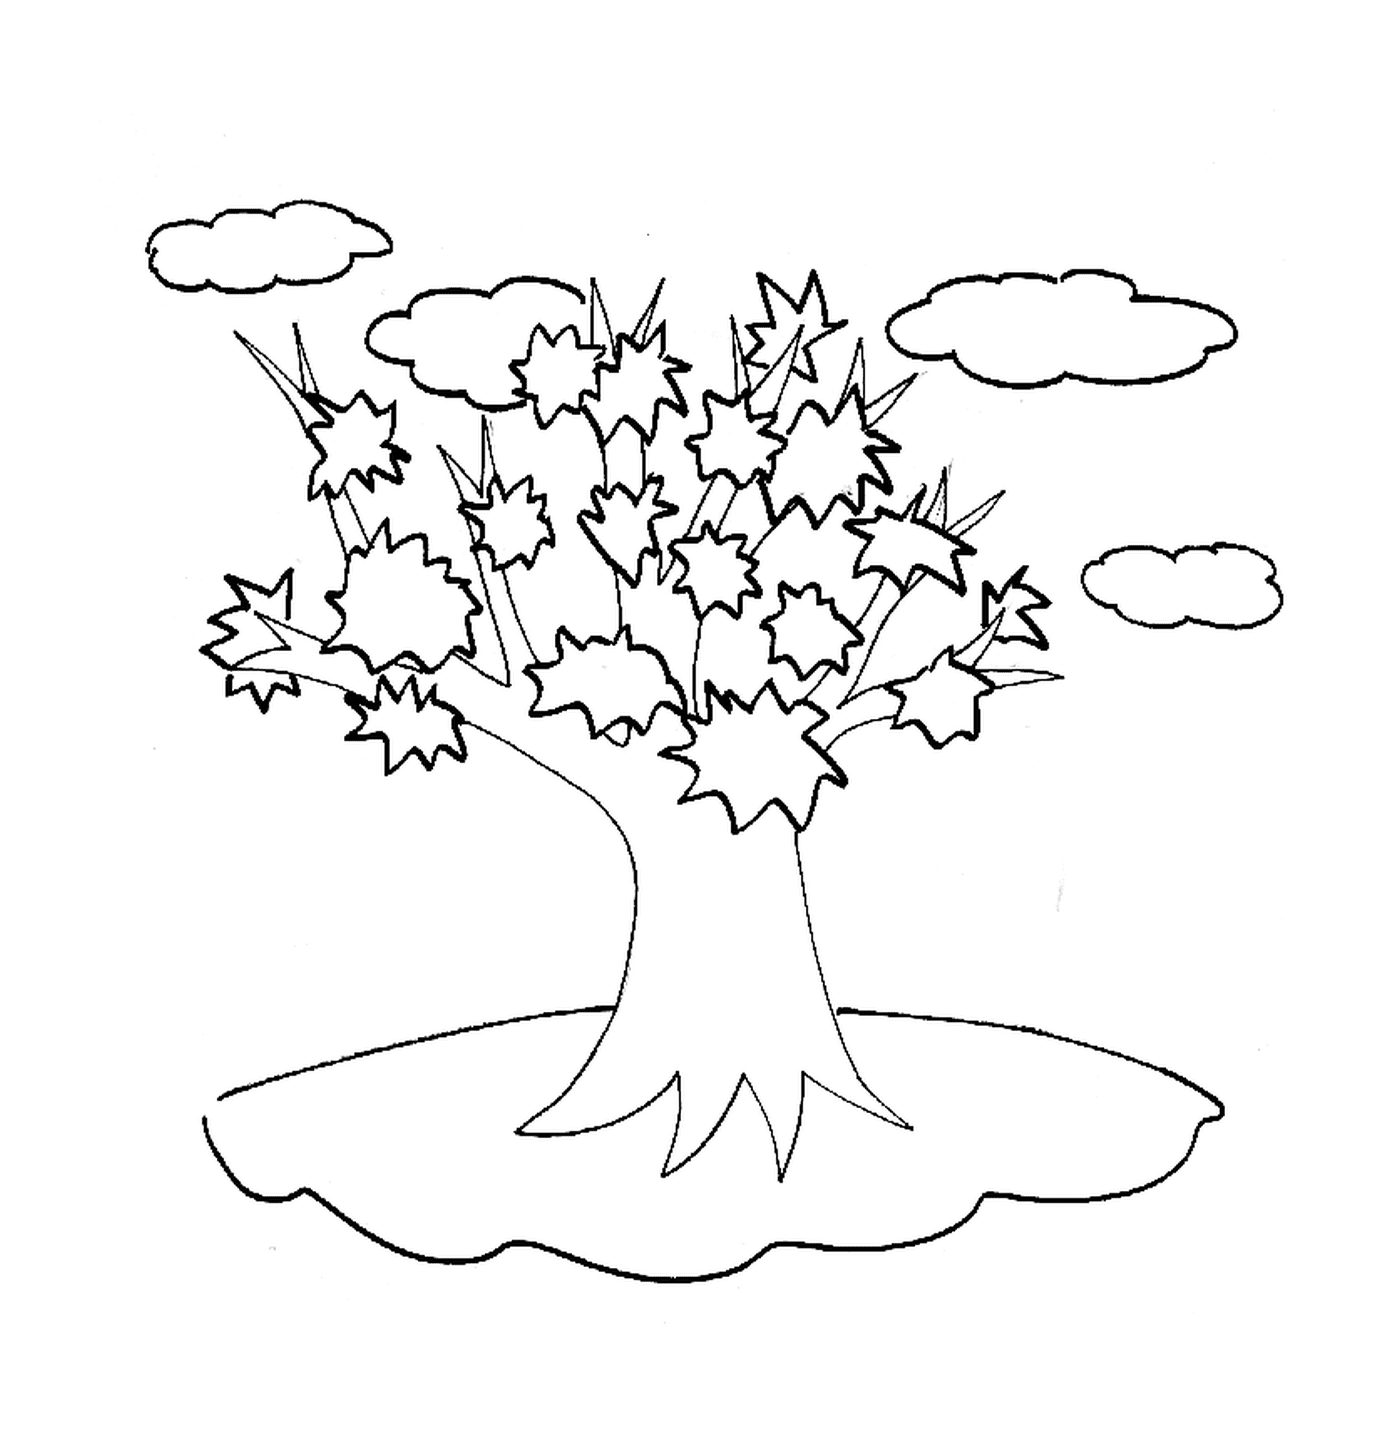  Дерево с листьями 